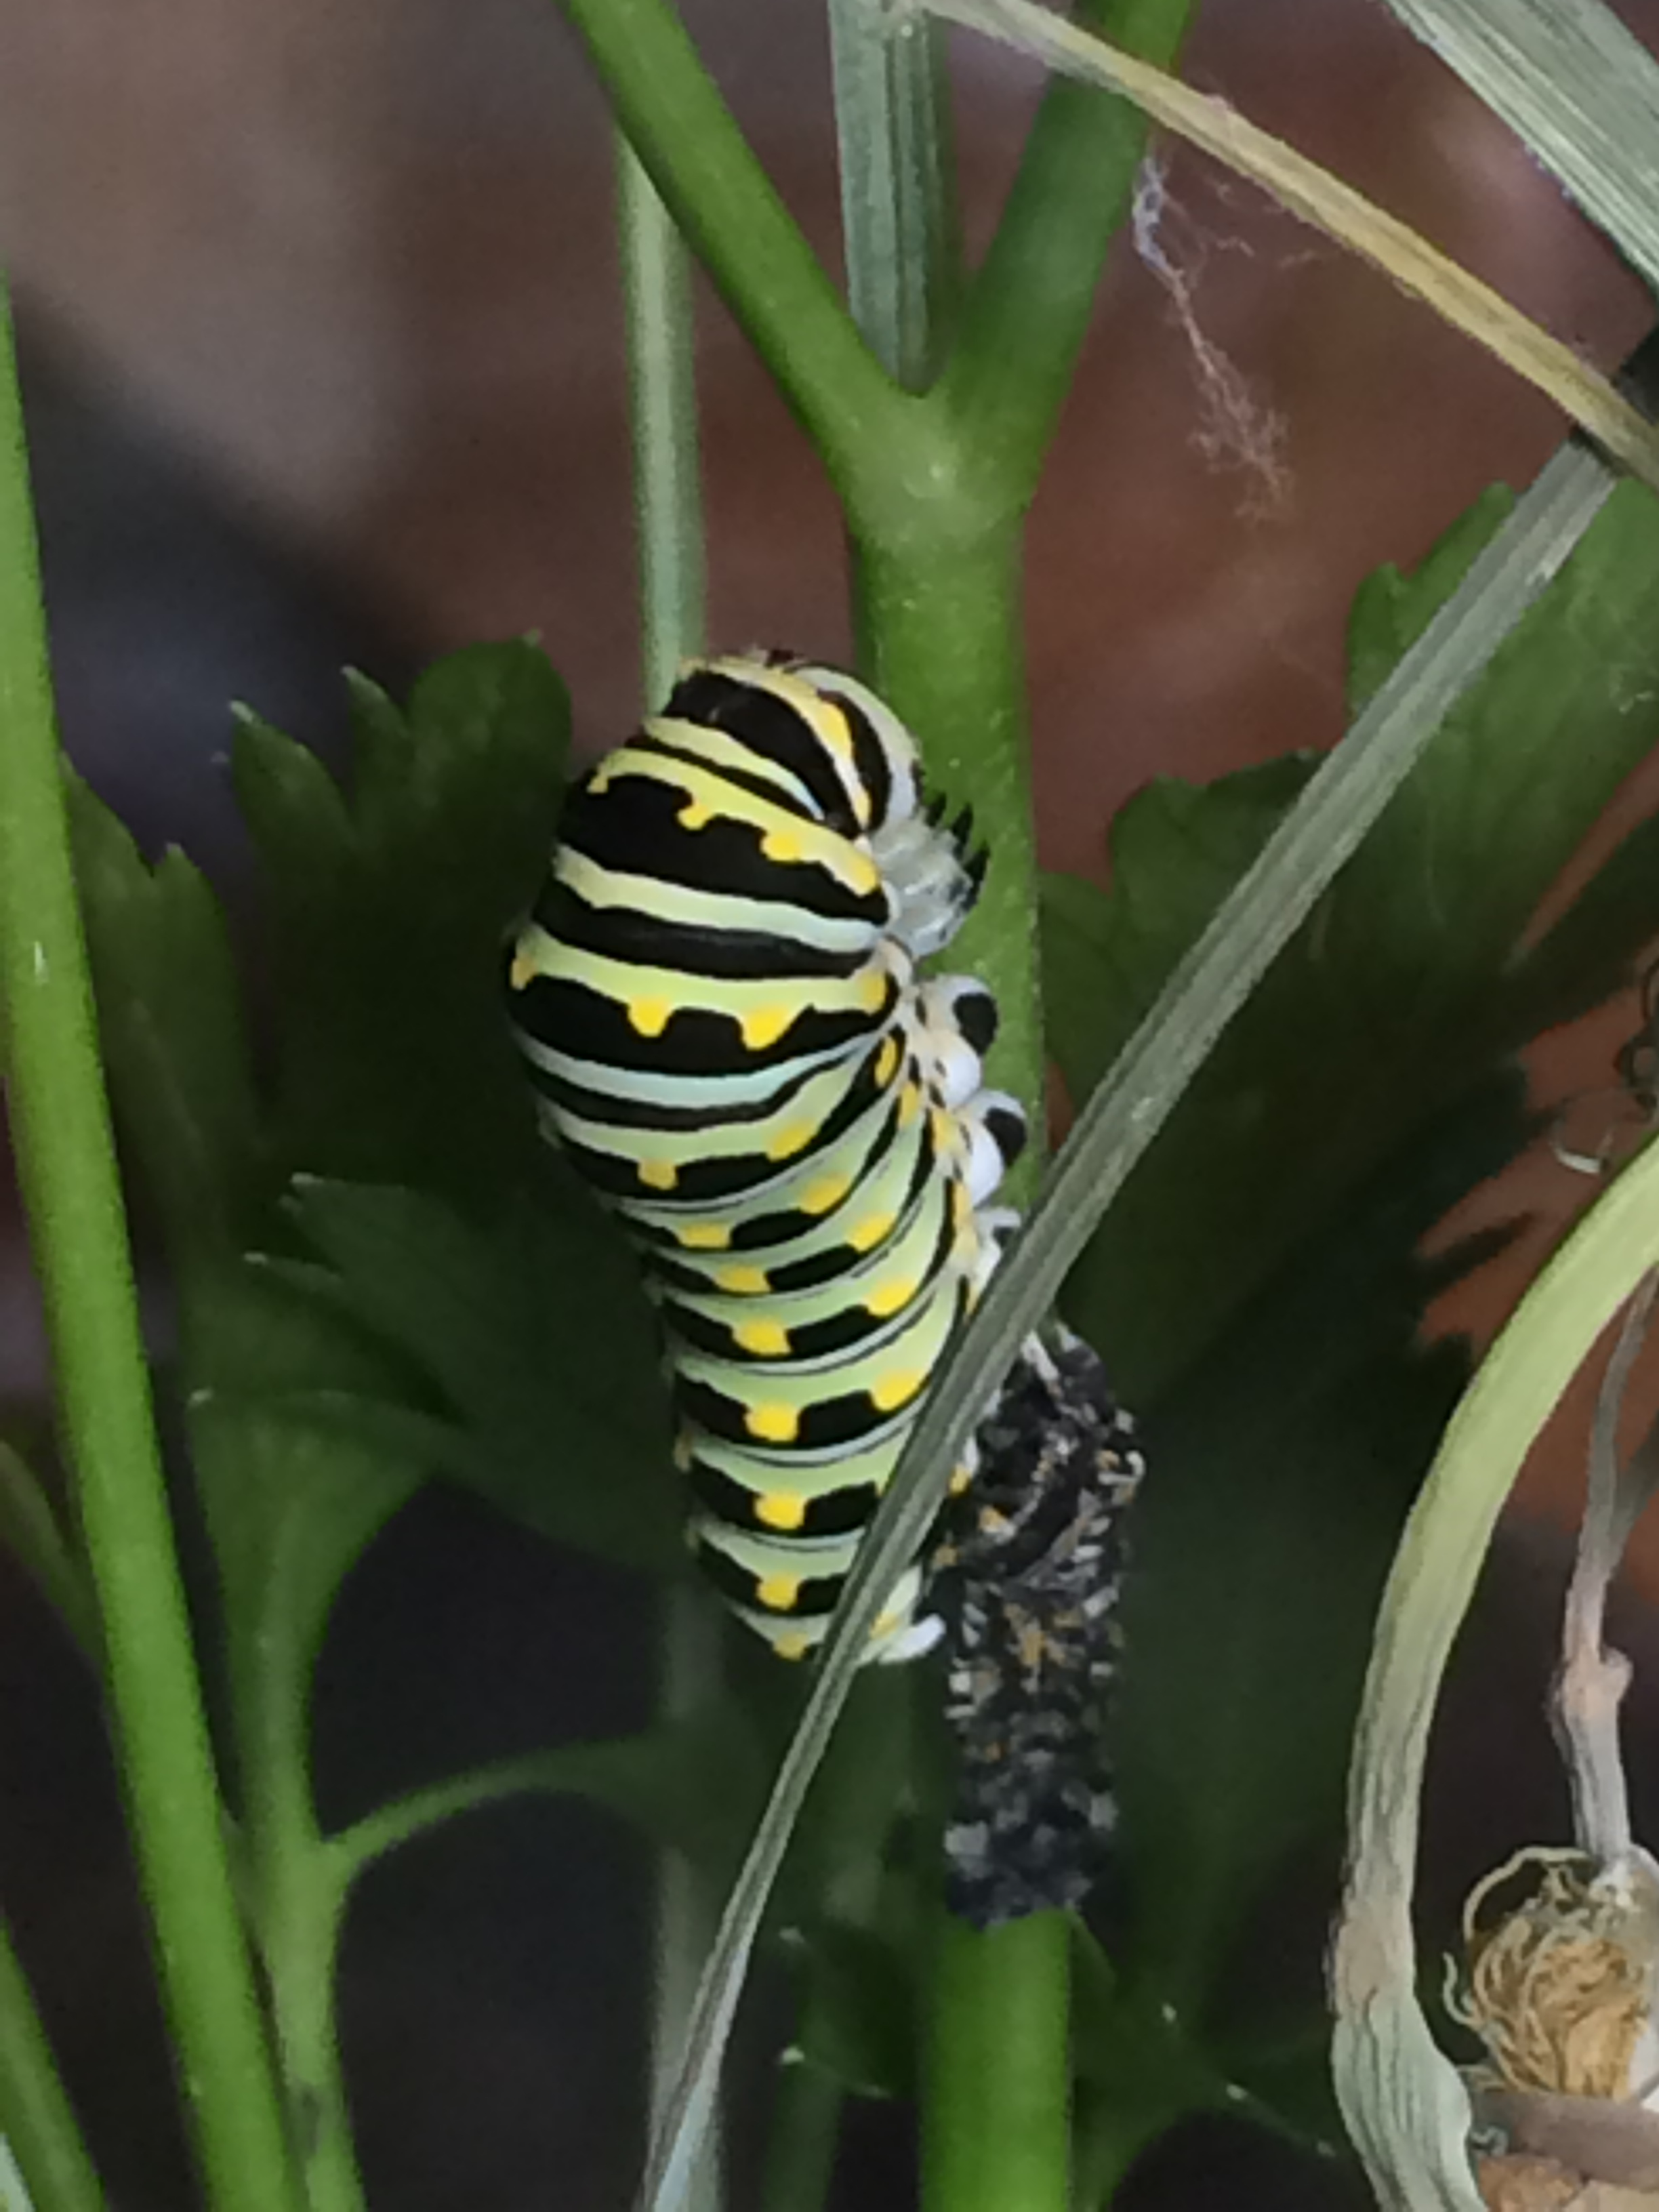 Caterpillar with skin